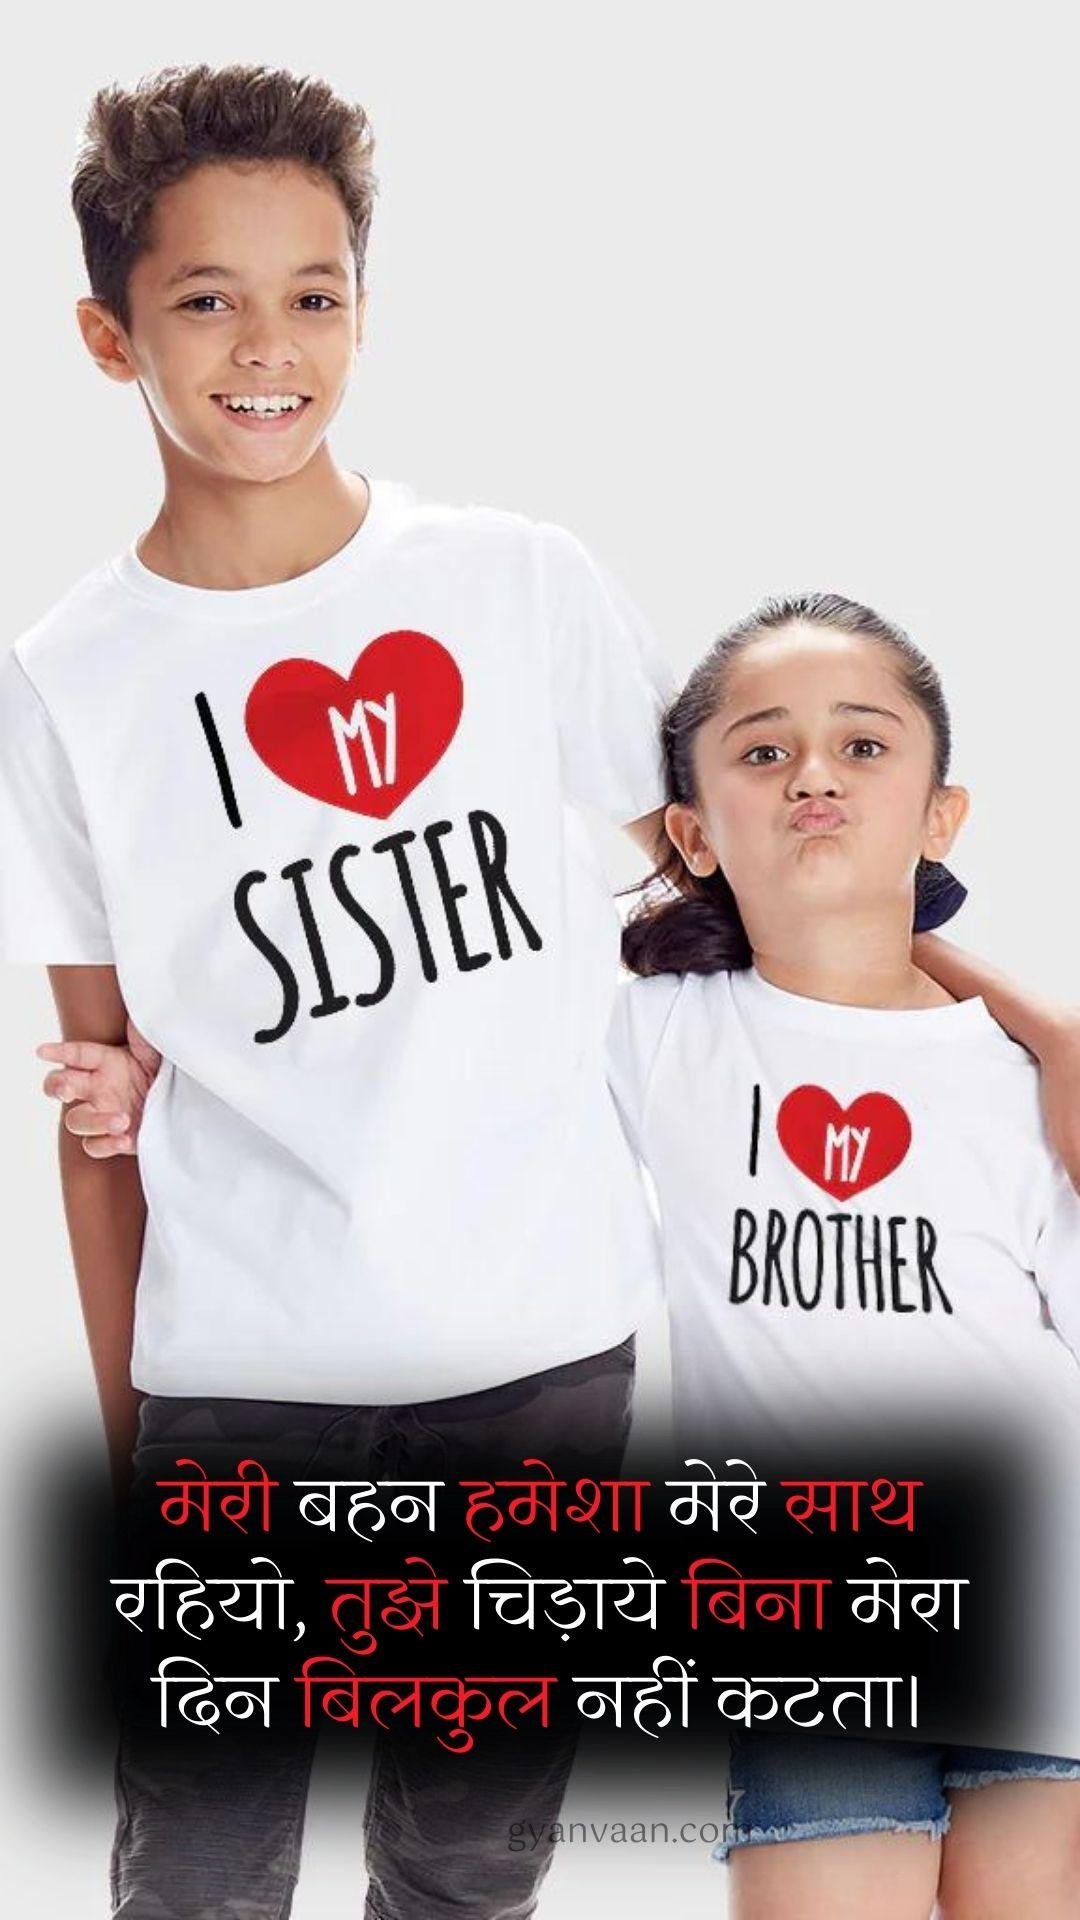 Brother And Sister Shayari Quotes And Status With Captions For Mobile 65 - Brother And Sister Quotes